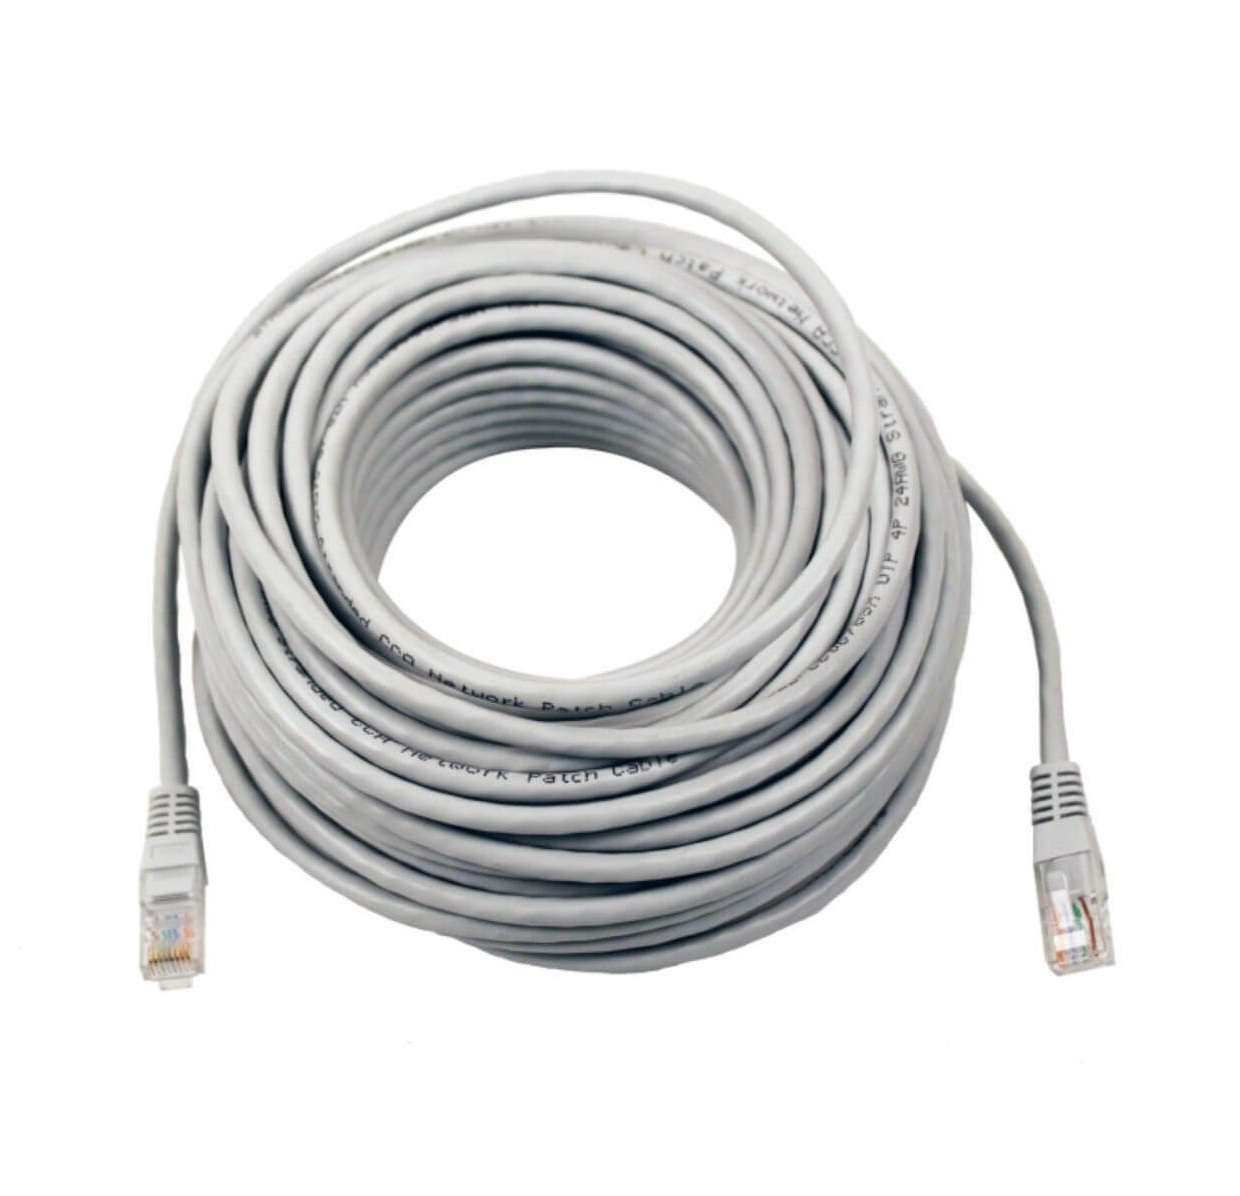 Cablu UTP Retea, Alb/Gri, Ethernet Cat 5e, 20m Lungime – Cablu Patch de Internet cu Mufa, Conector RJ45